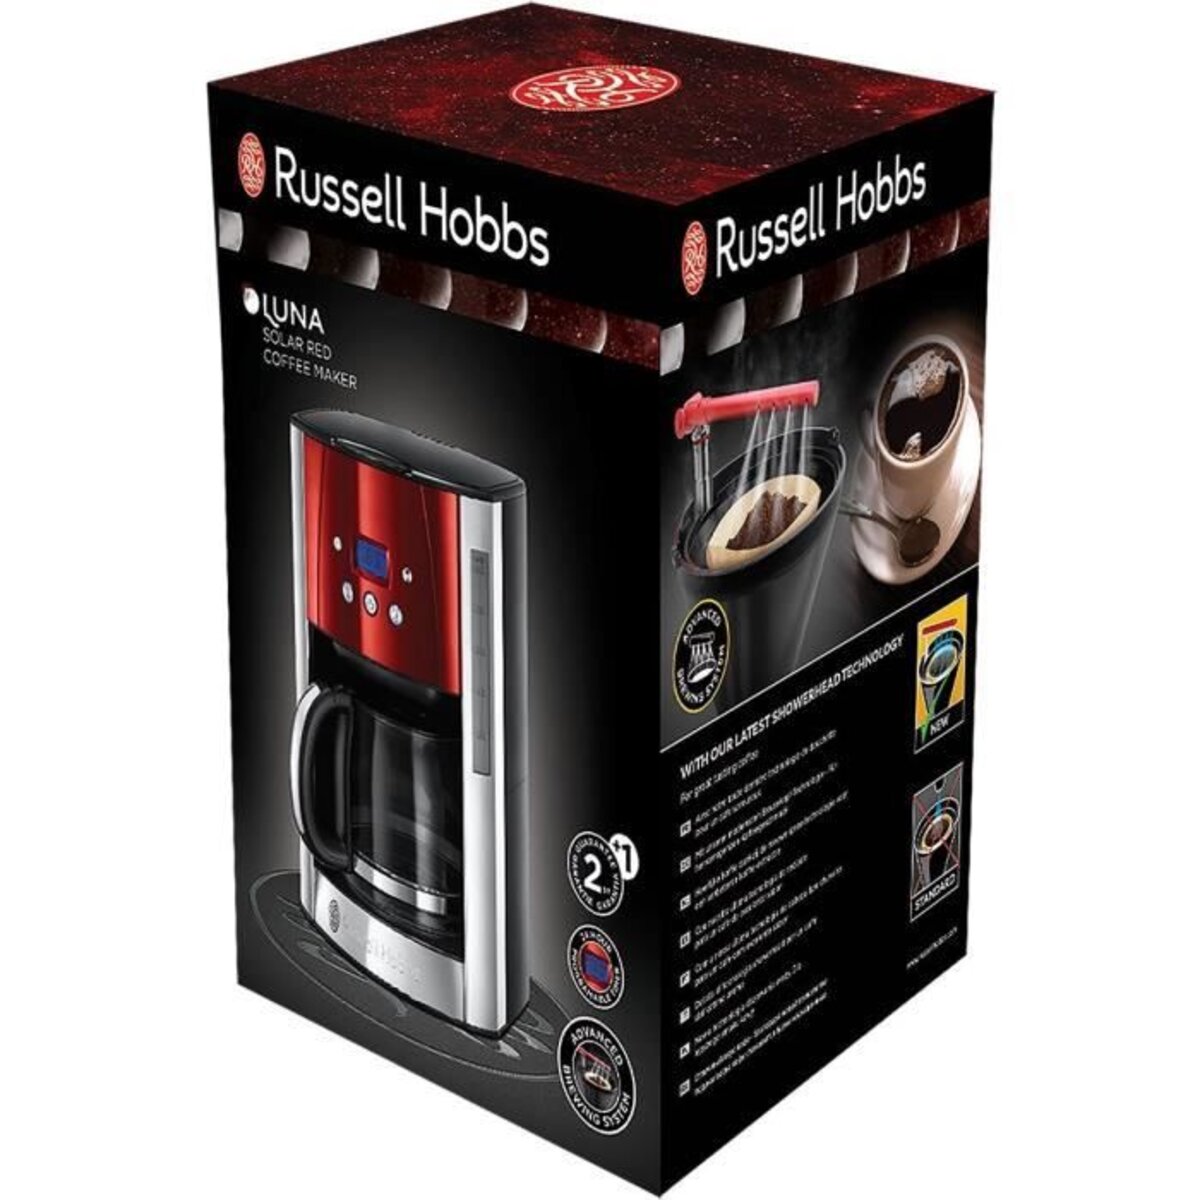 Russell Hobbs Cafetière [Technologie WhirlTech-extraction optimale] Luna  rouge (1000W,Verseuse en verre 1,5L, 12 tasses, Programmable, Minuteur